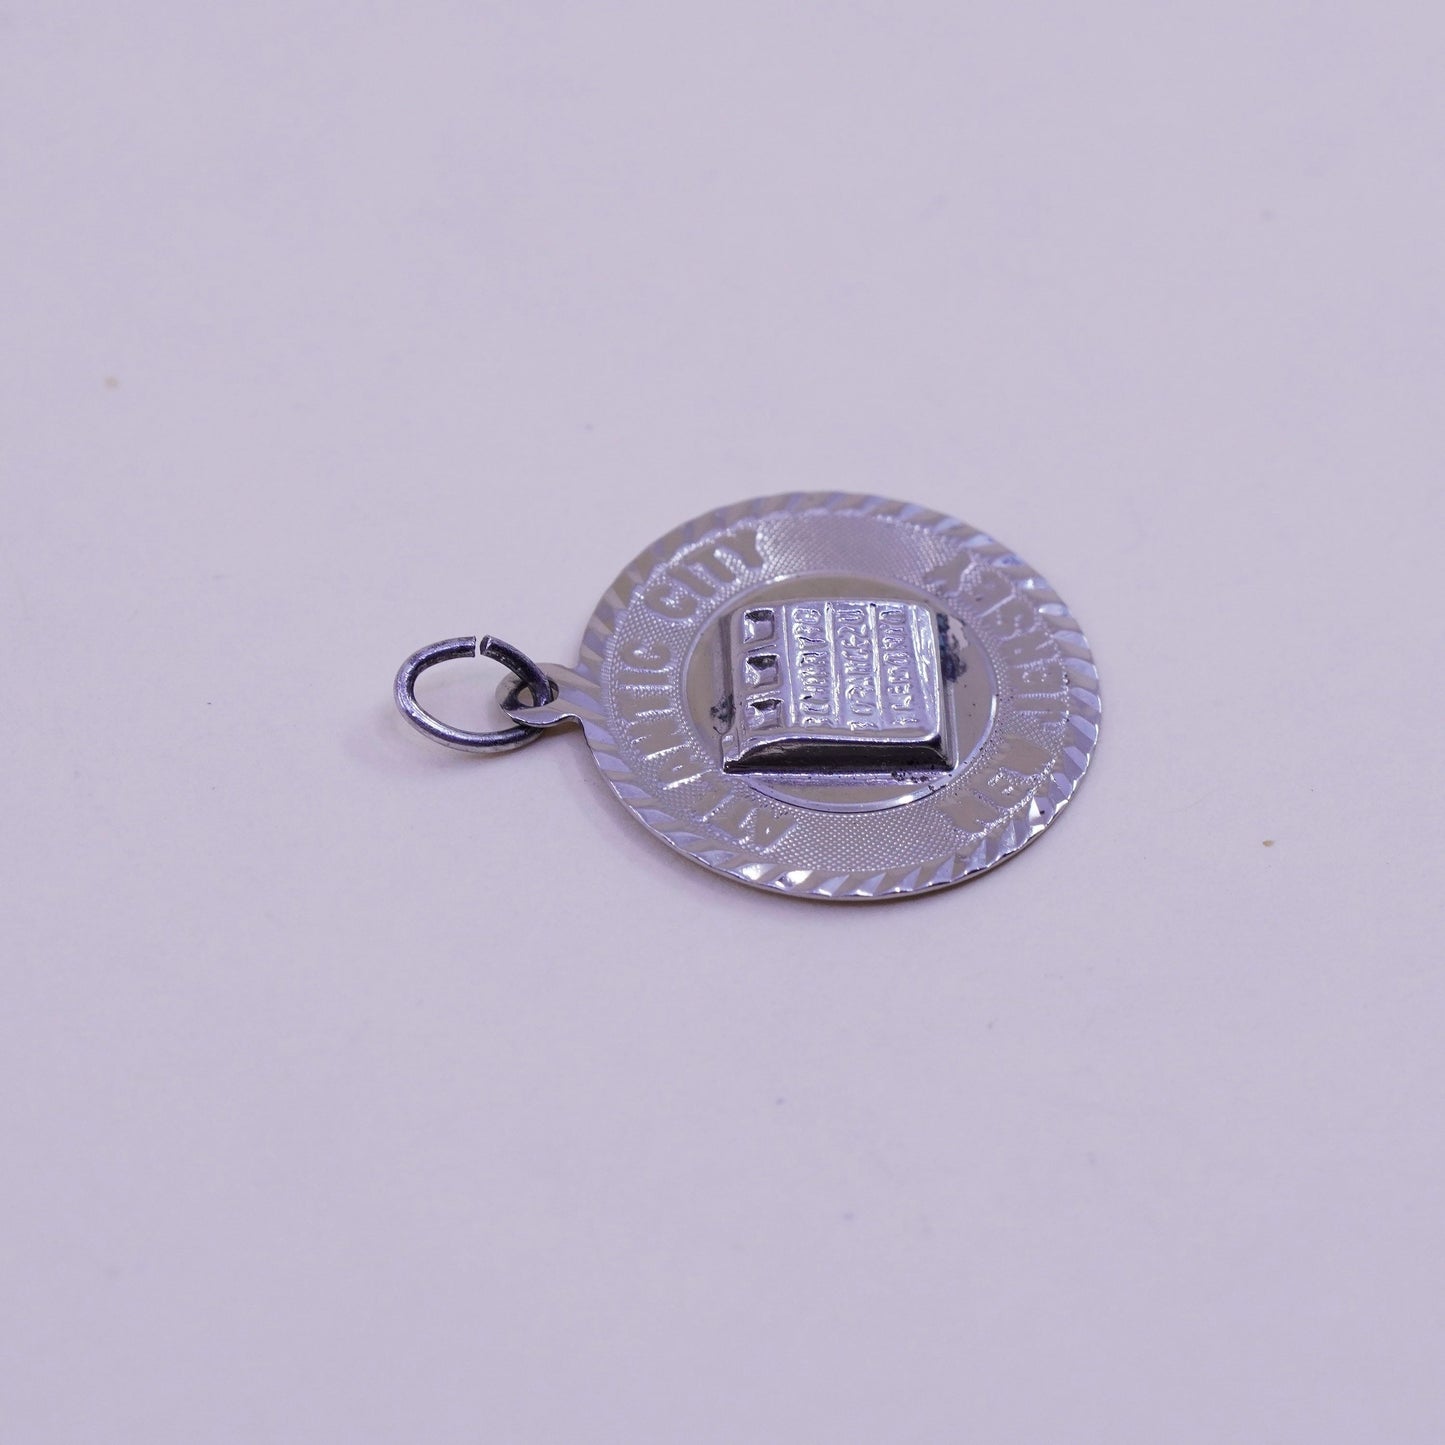 Vintage sterling silver charm, 925 New Jersey Atlantic City pendant